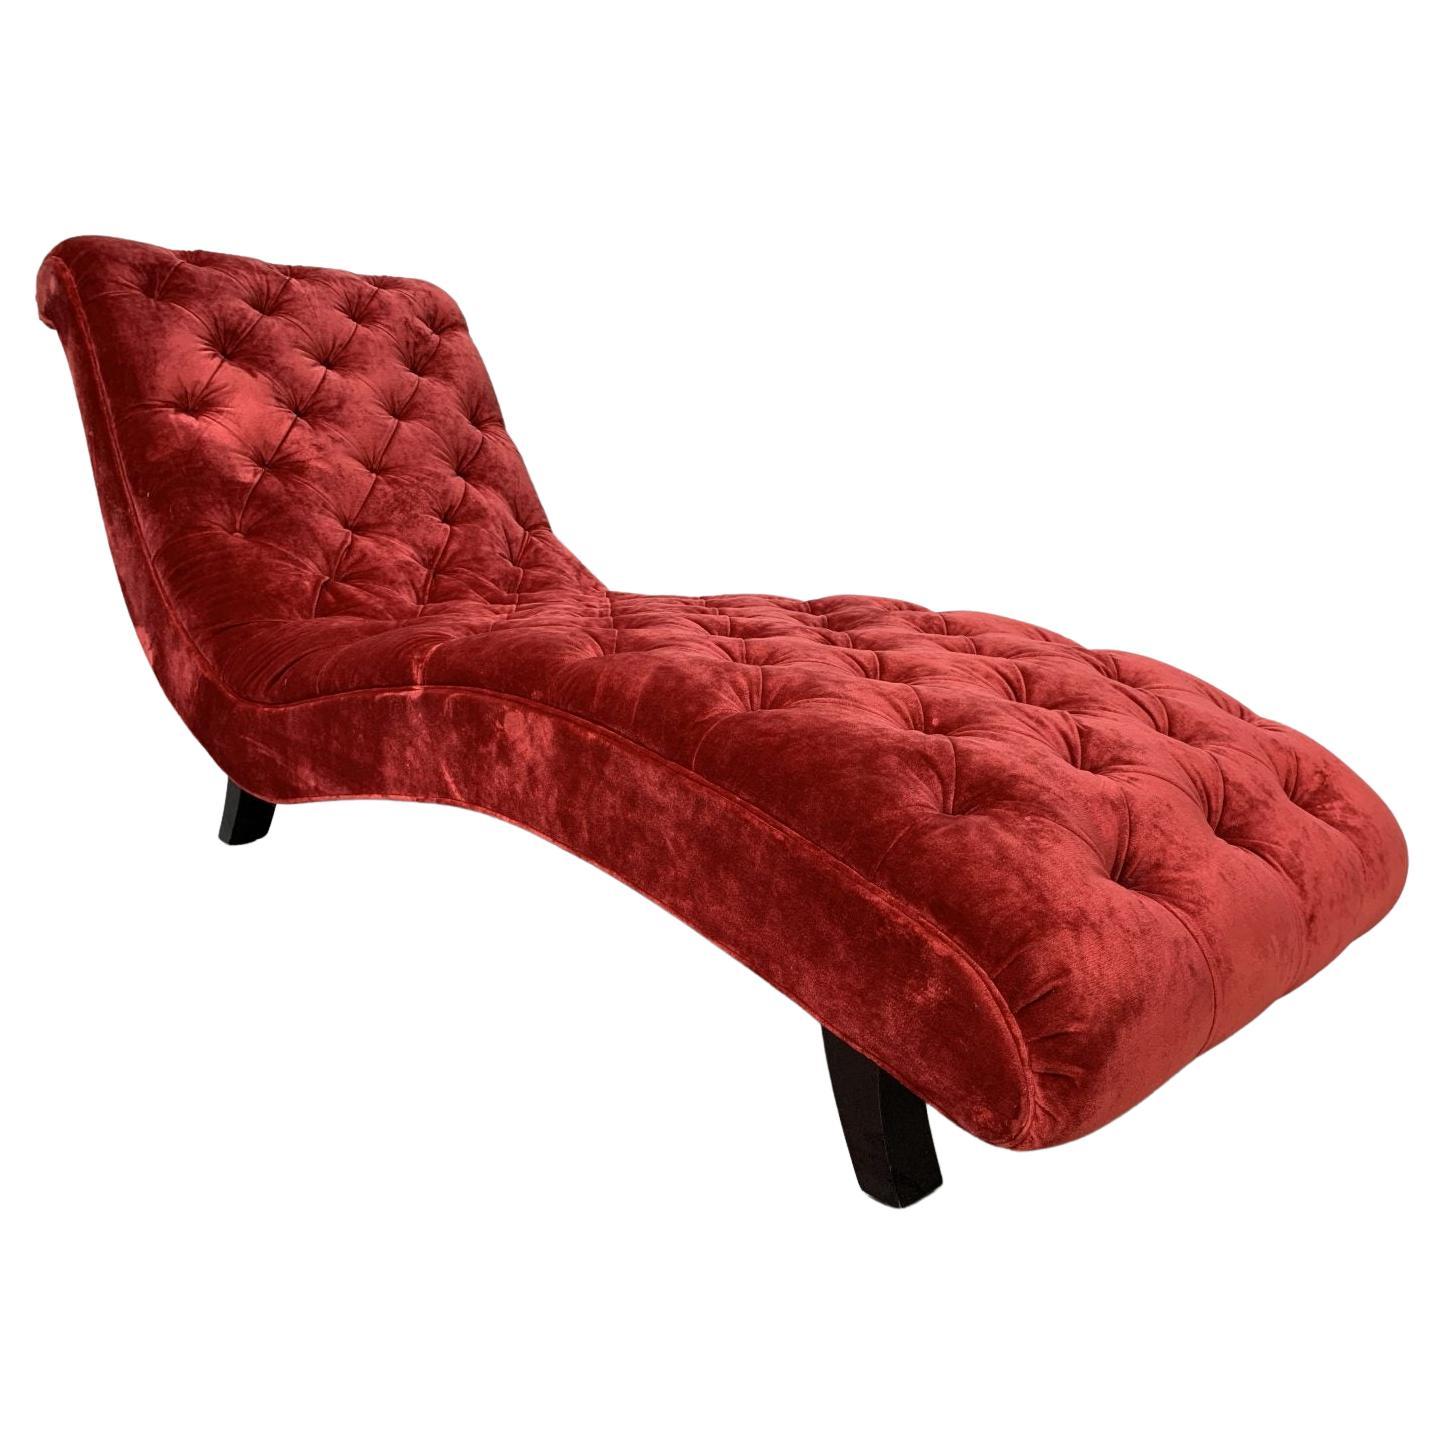 George Smith Chaise - Brewster - Chaise en velours italien rouge foncé